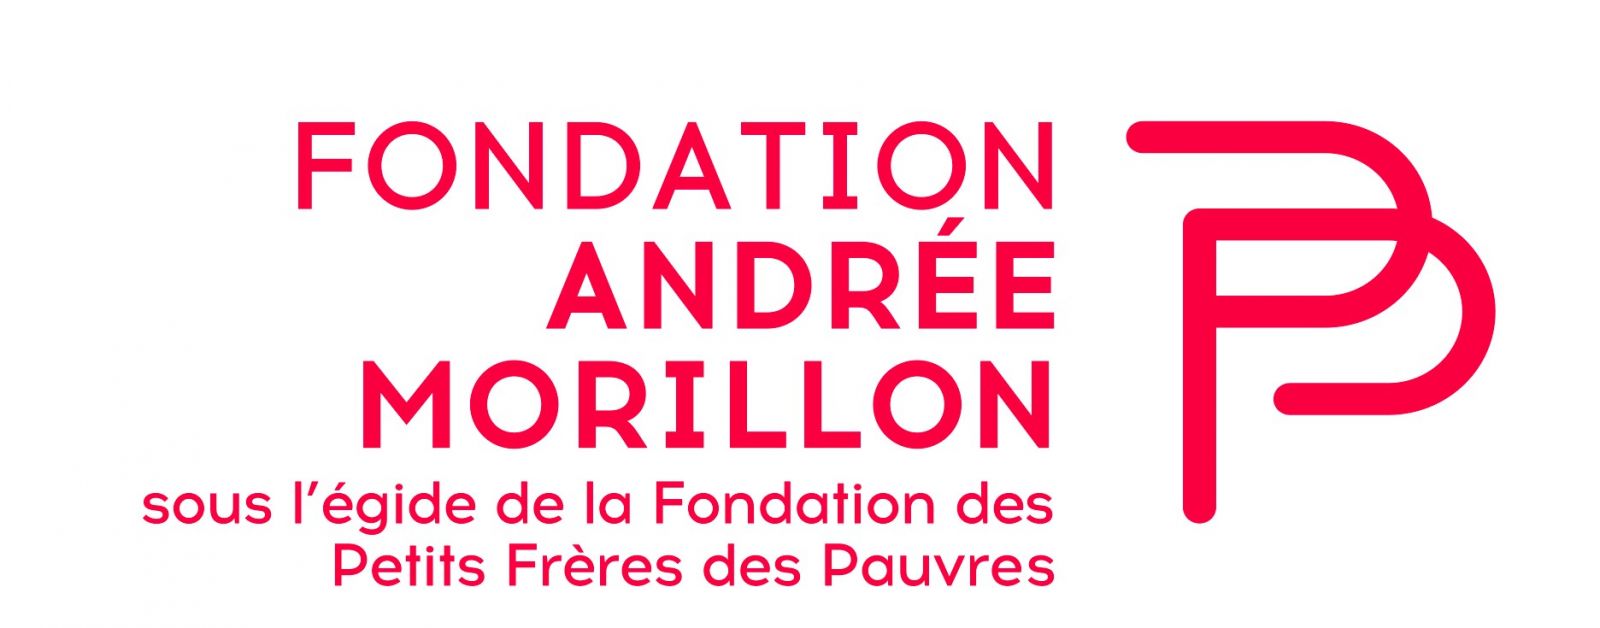 logo fondation morillon